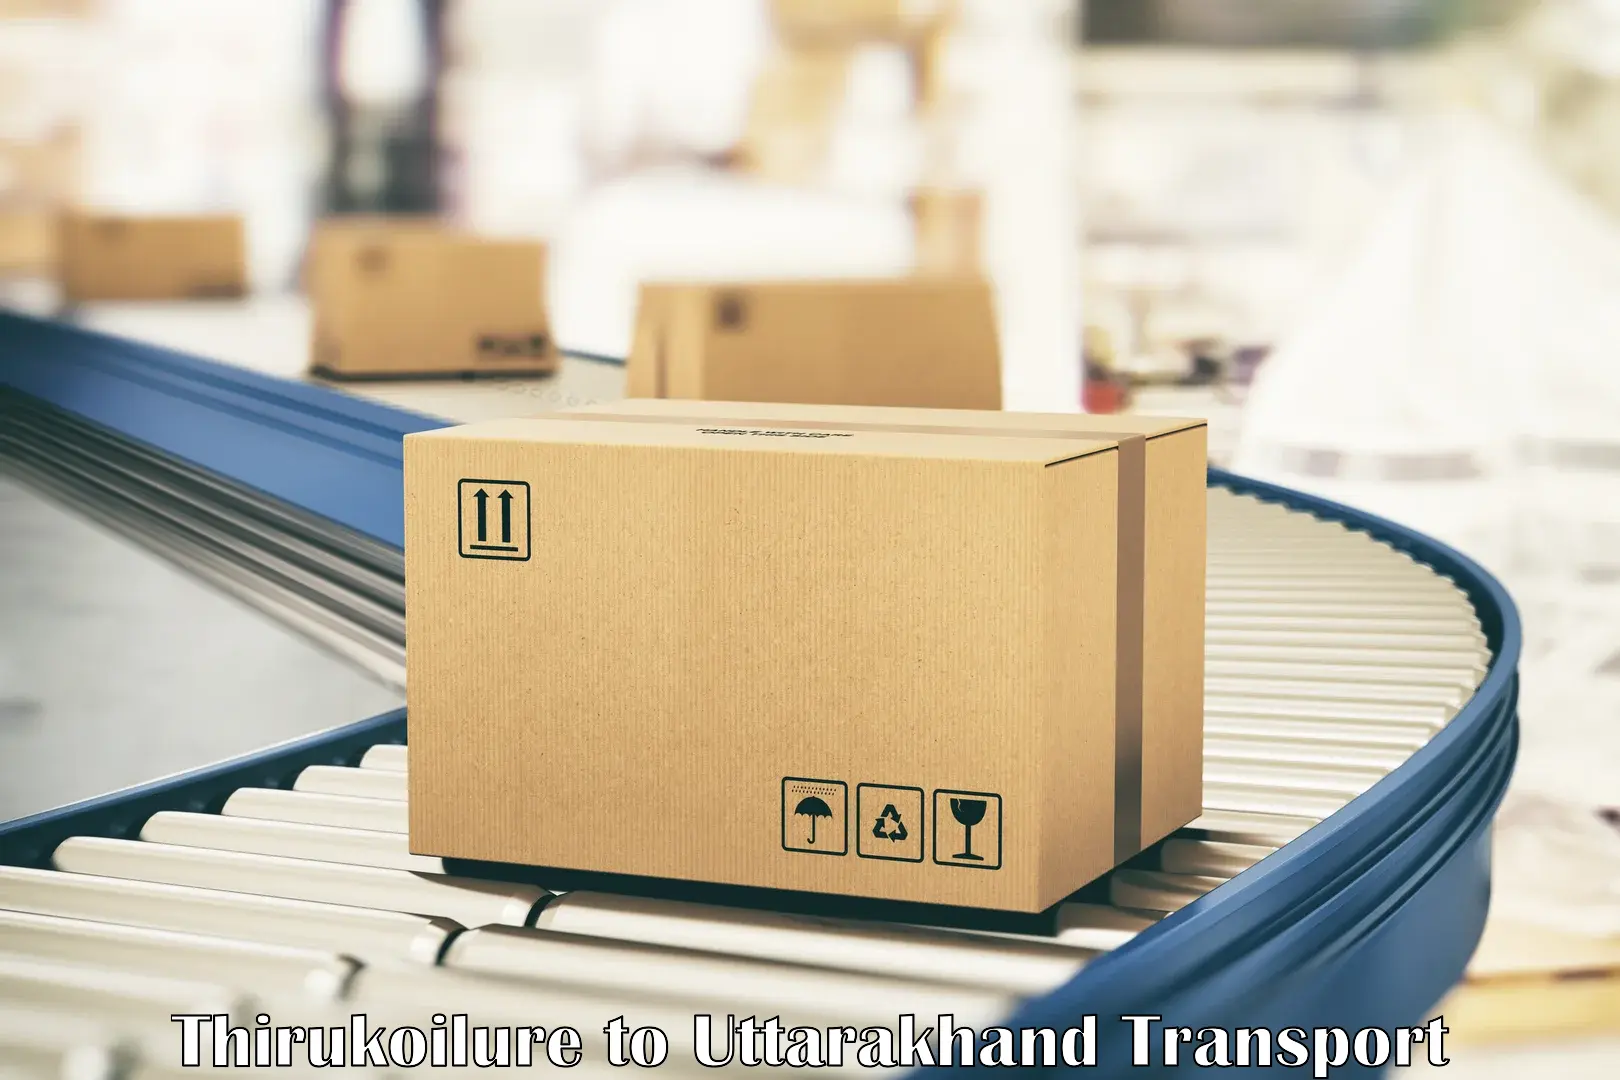 Logistics transportation services Thirukoilure to Lansdowne